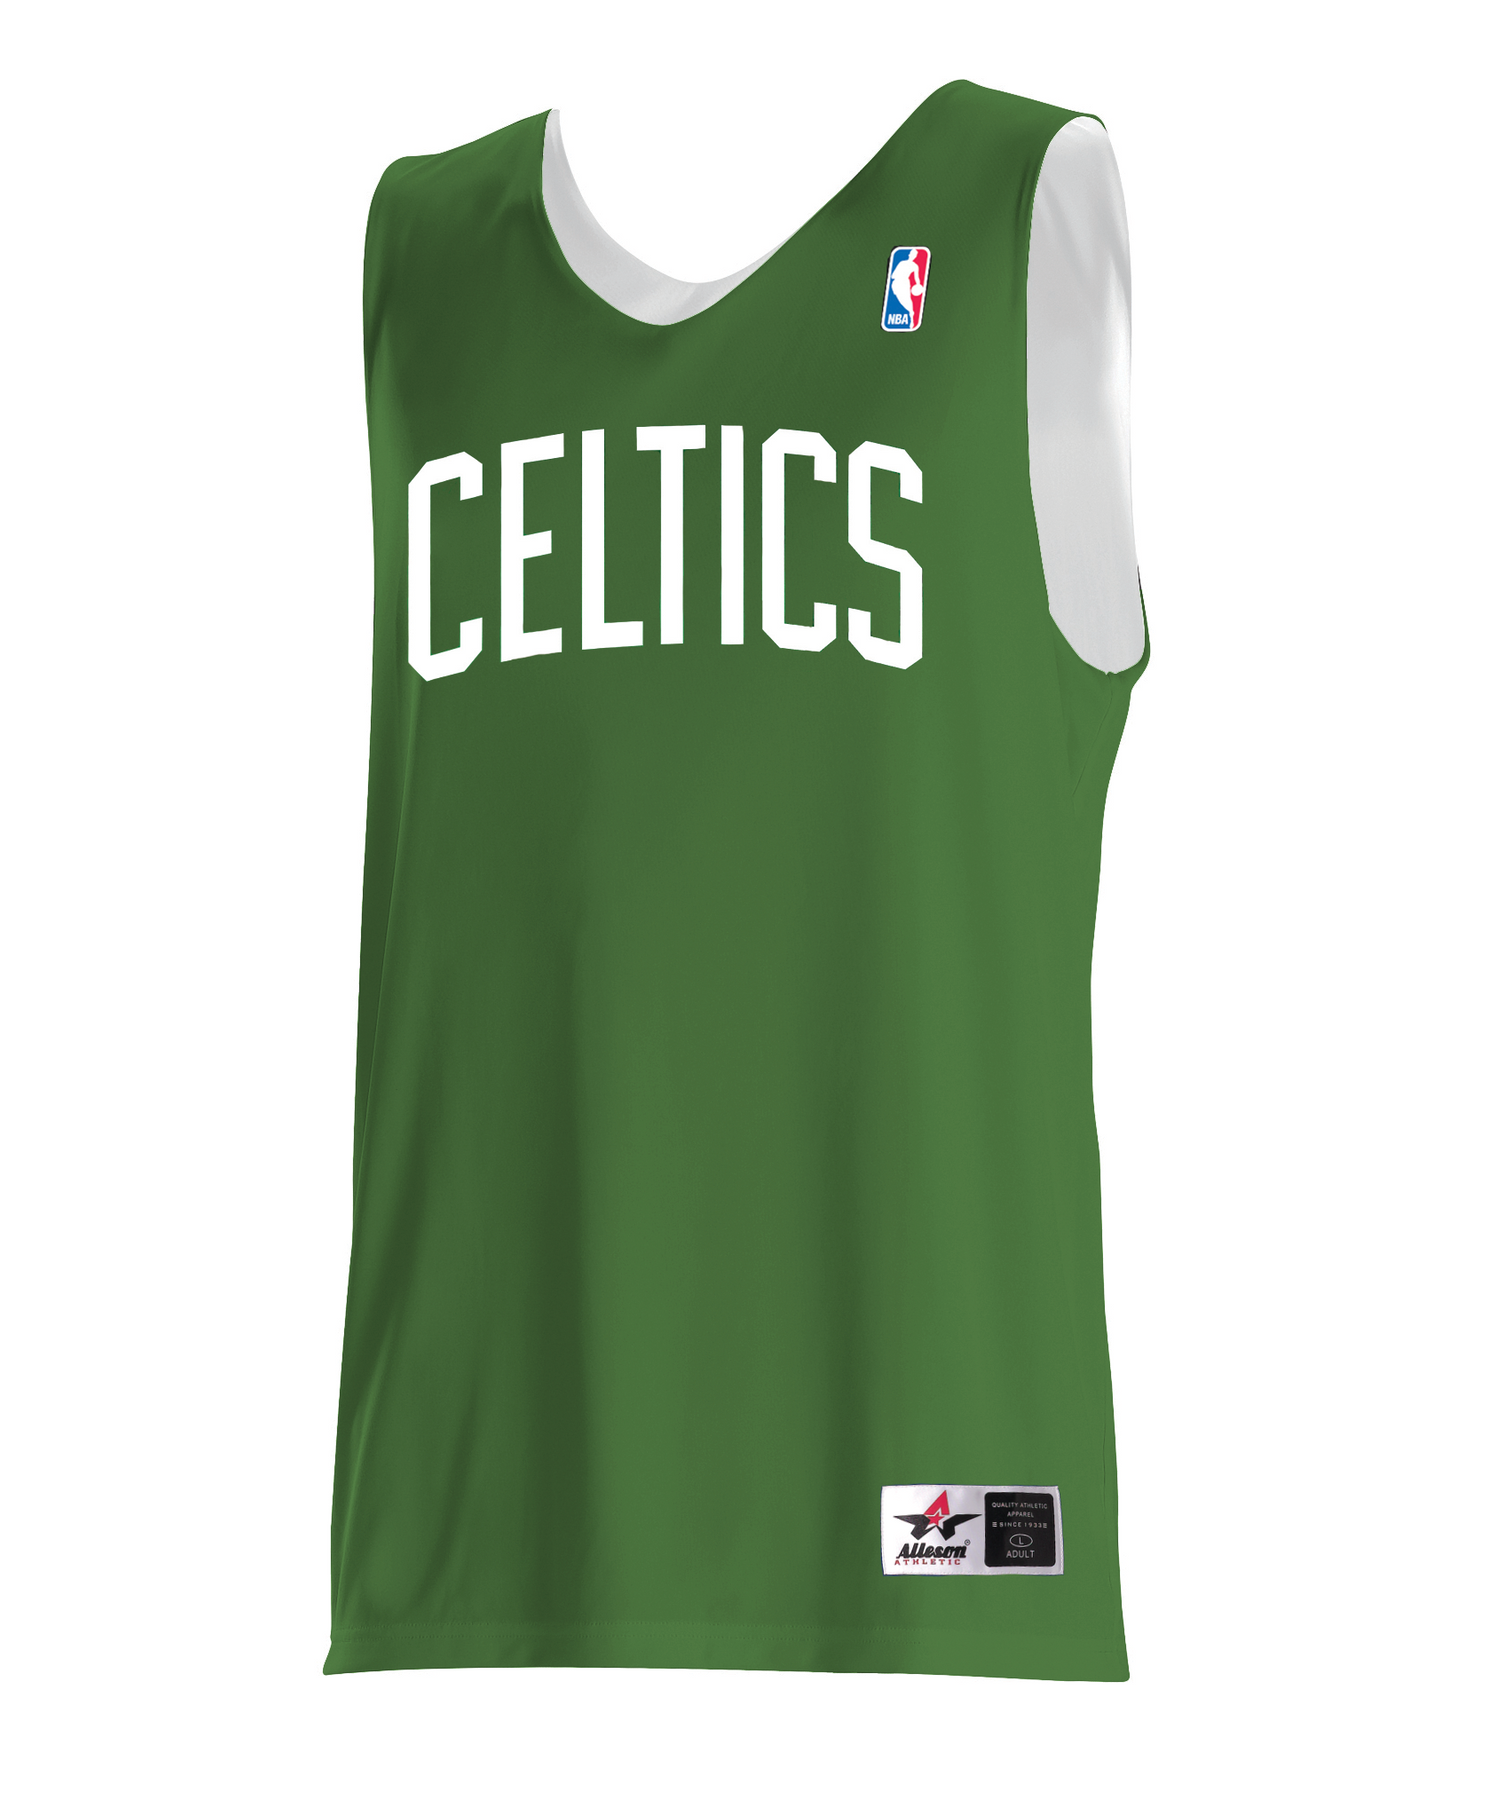 Custom Alleson Adult NBA Boston Celtics Reversible Jersey